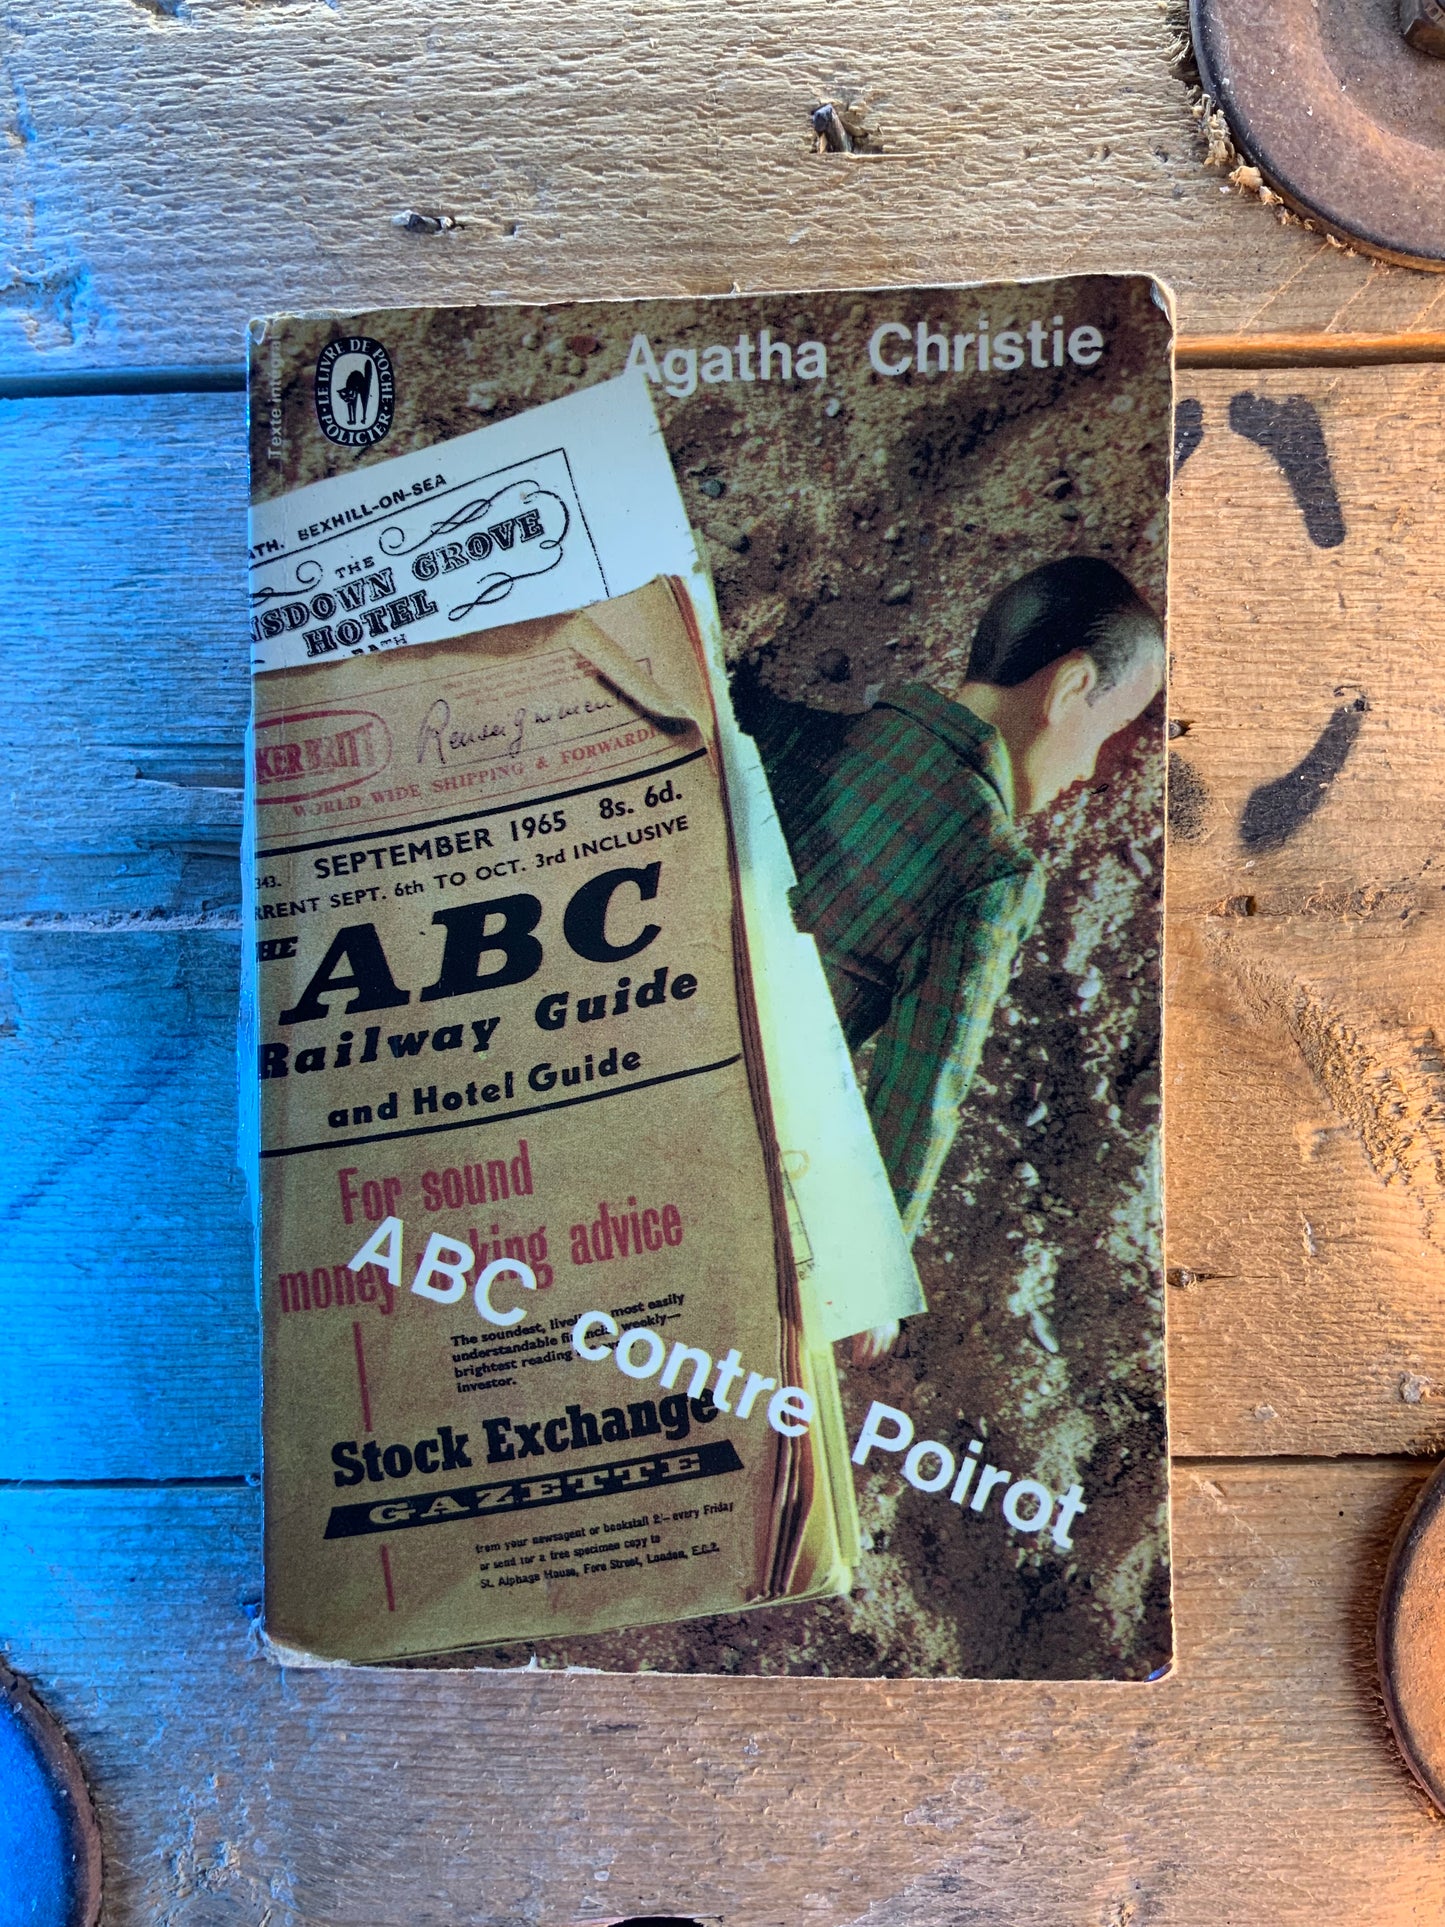 ABC contre Poirot - Agatha Christie